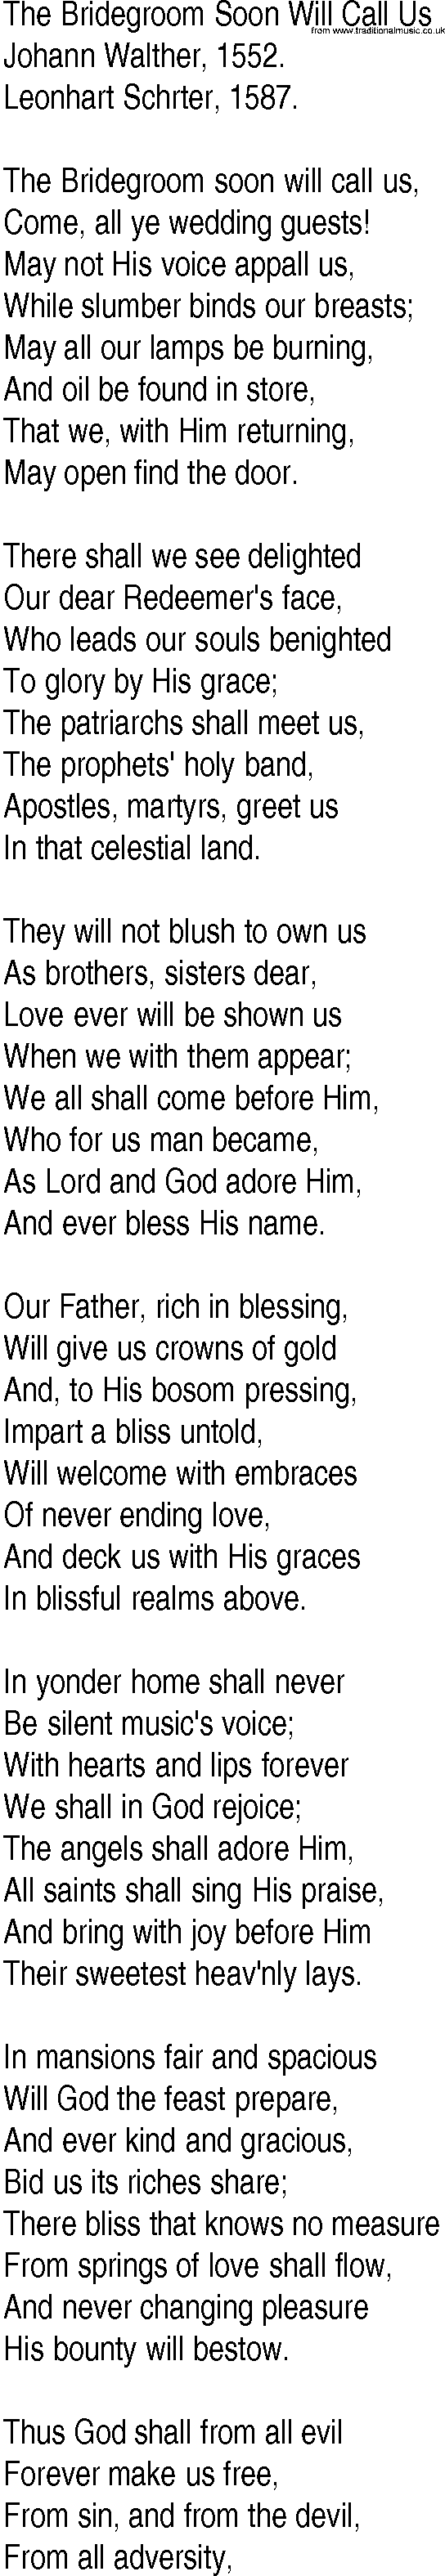 Hymn and Gospel Song: The Bridegroom Soon Will Call Us by Johann Walther lyrics